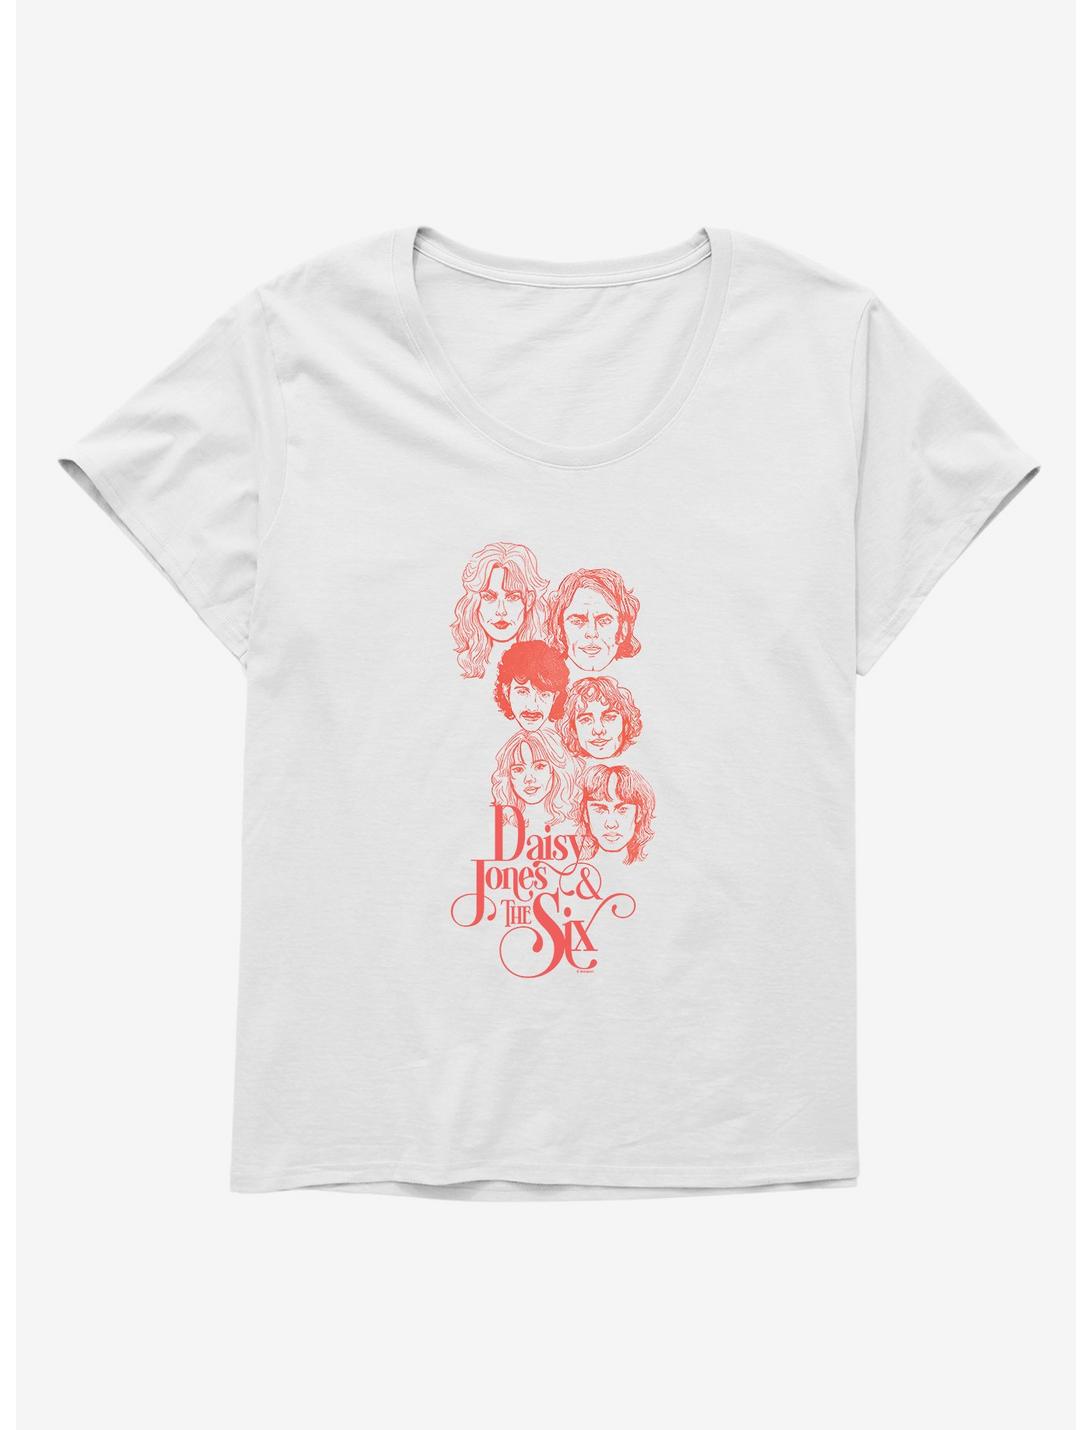 Daisy Jones & The Six Band Illustration Womens T-Shirt Plus Size, WHITE, hi-res